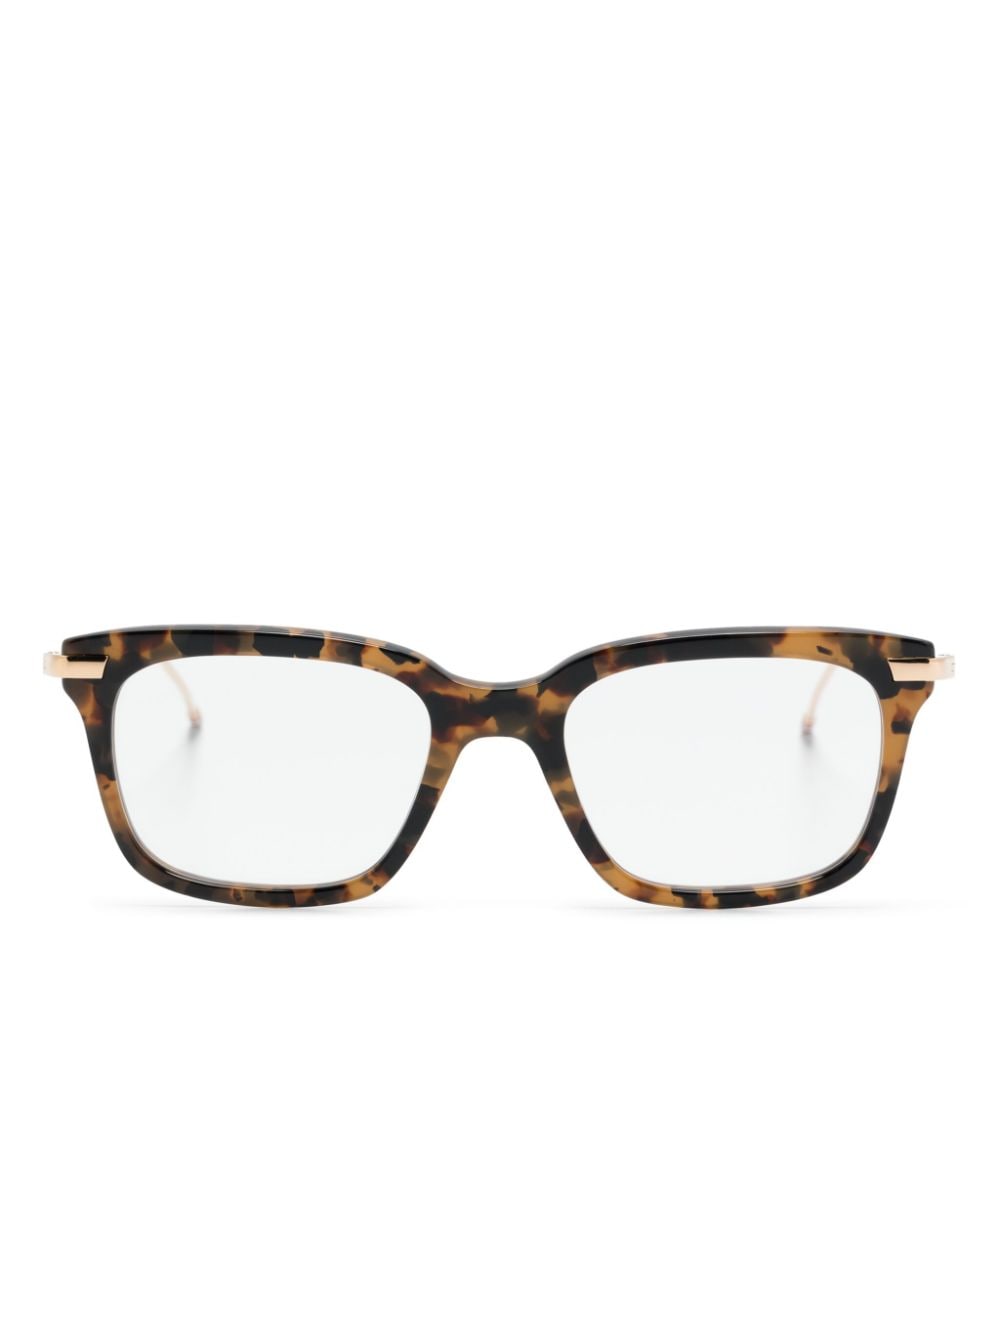 Thom Browne Eyewear tortoiseshell square-frame glasses von Thom Browne Eyewear